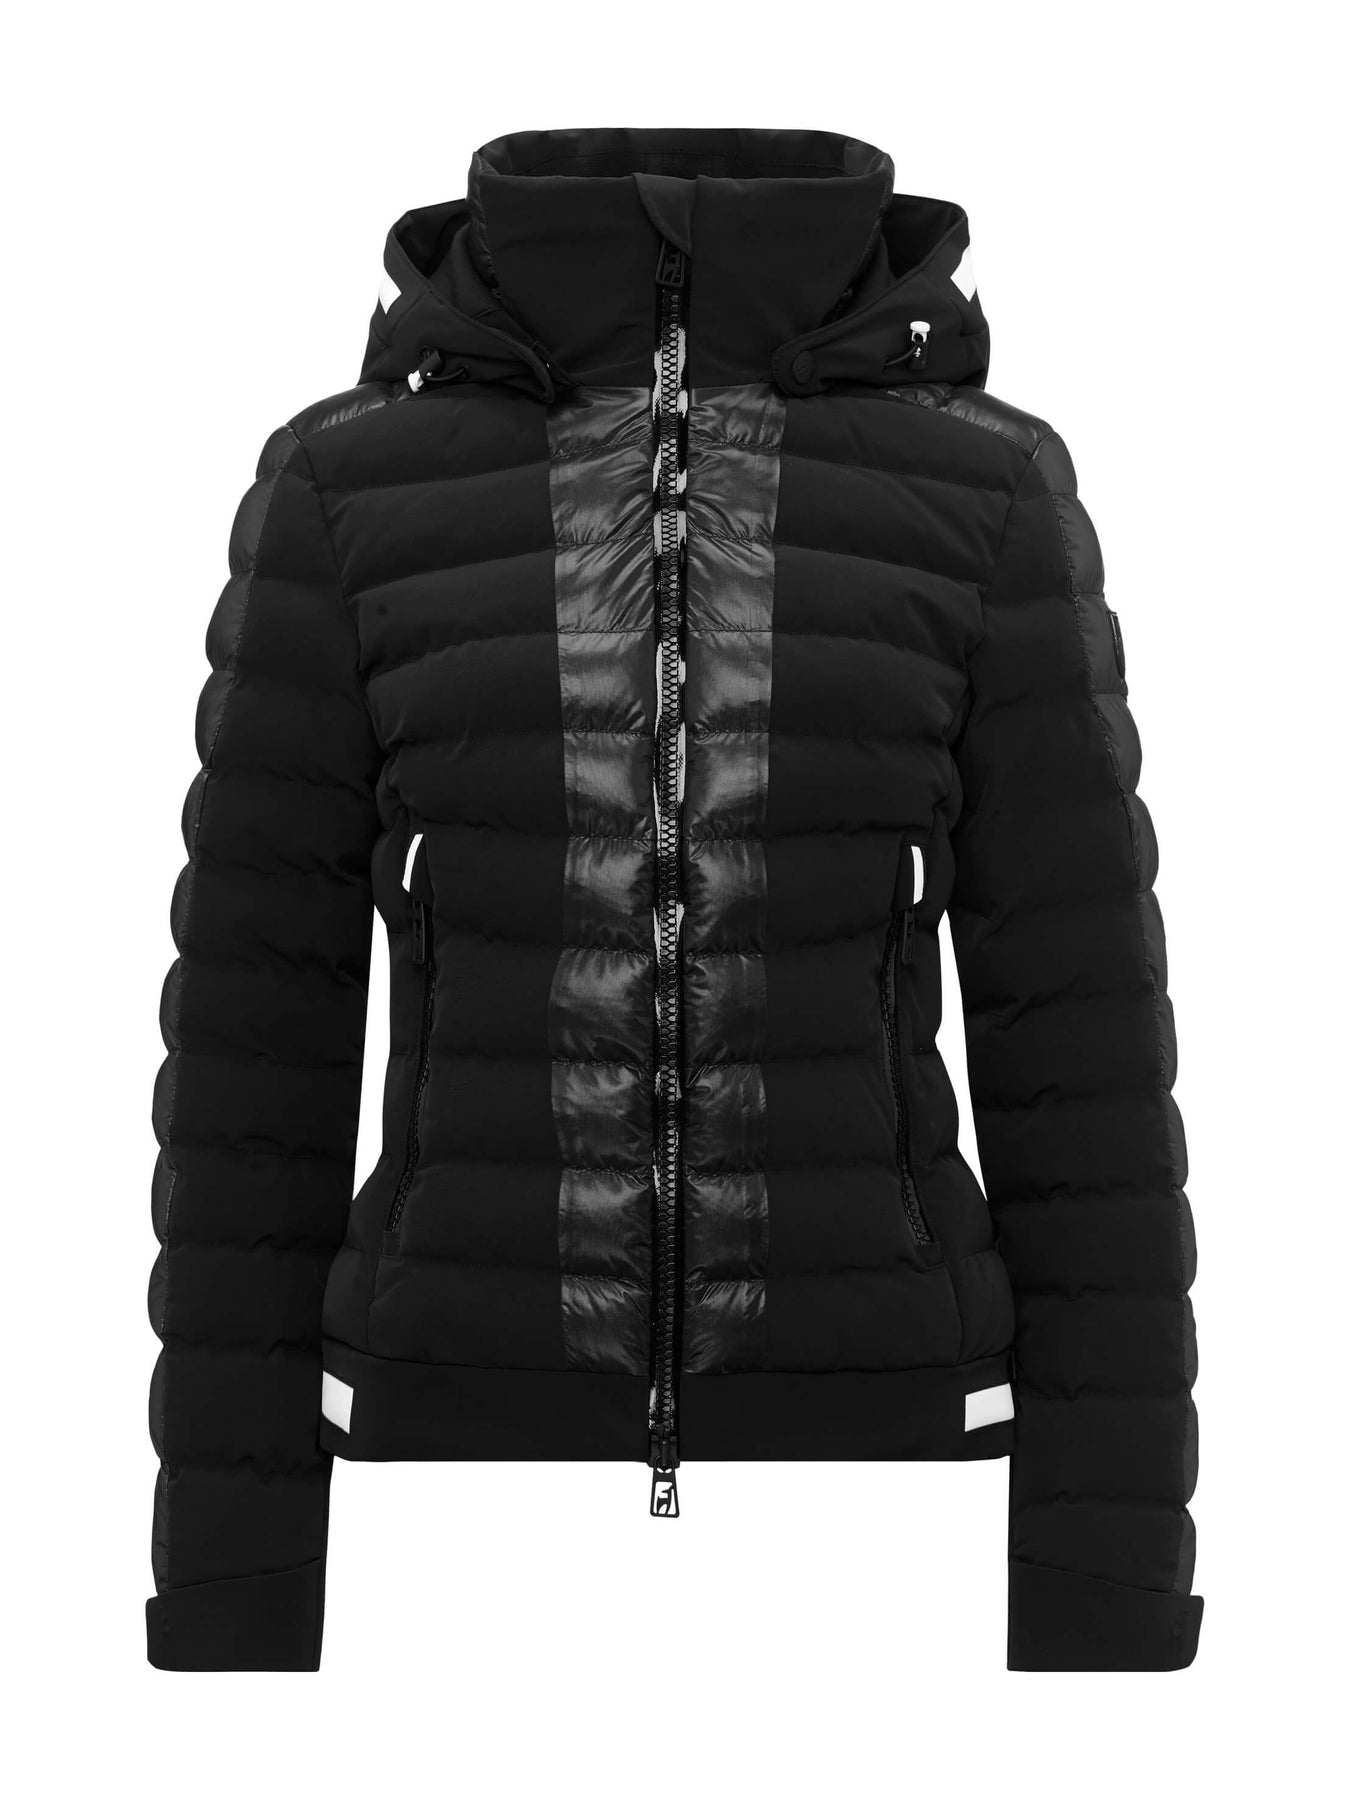 Norma Ski Jacket